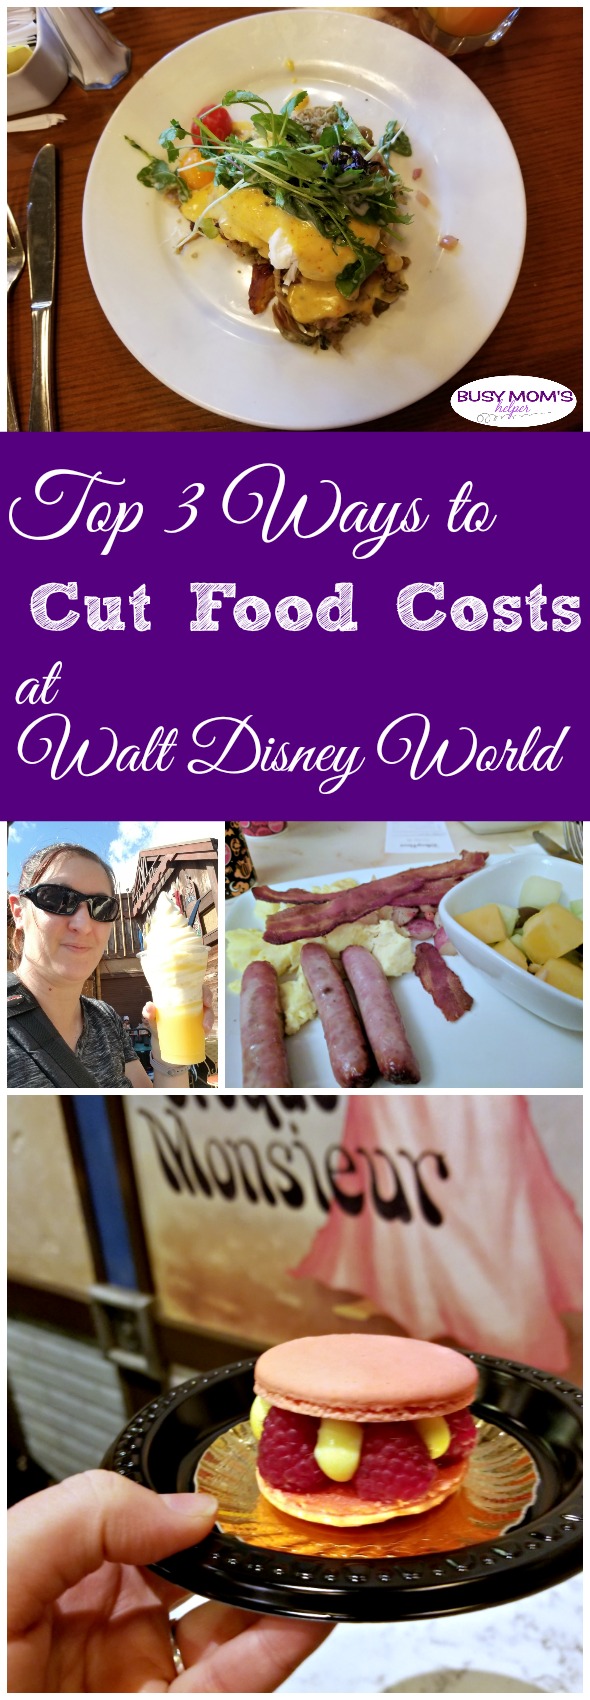 Top Tips to Cut Costs on Food at Walt Disney World - great ways to save money at Disney World! #wdw #waltdisneyworld #money #savingmoney #travel #familytravel #disney